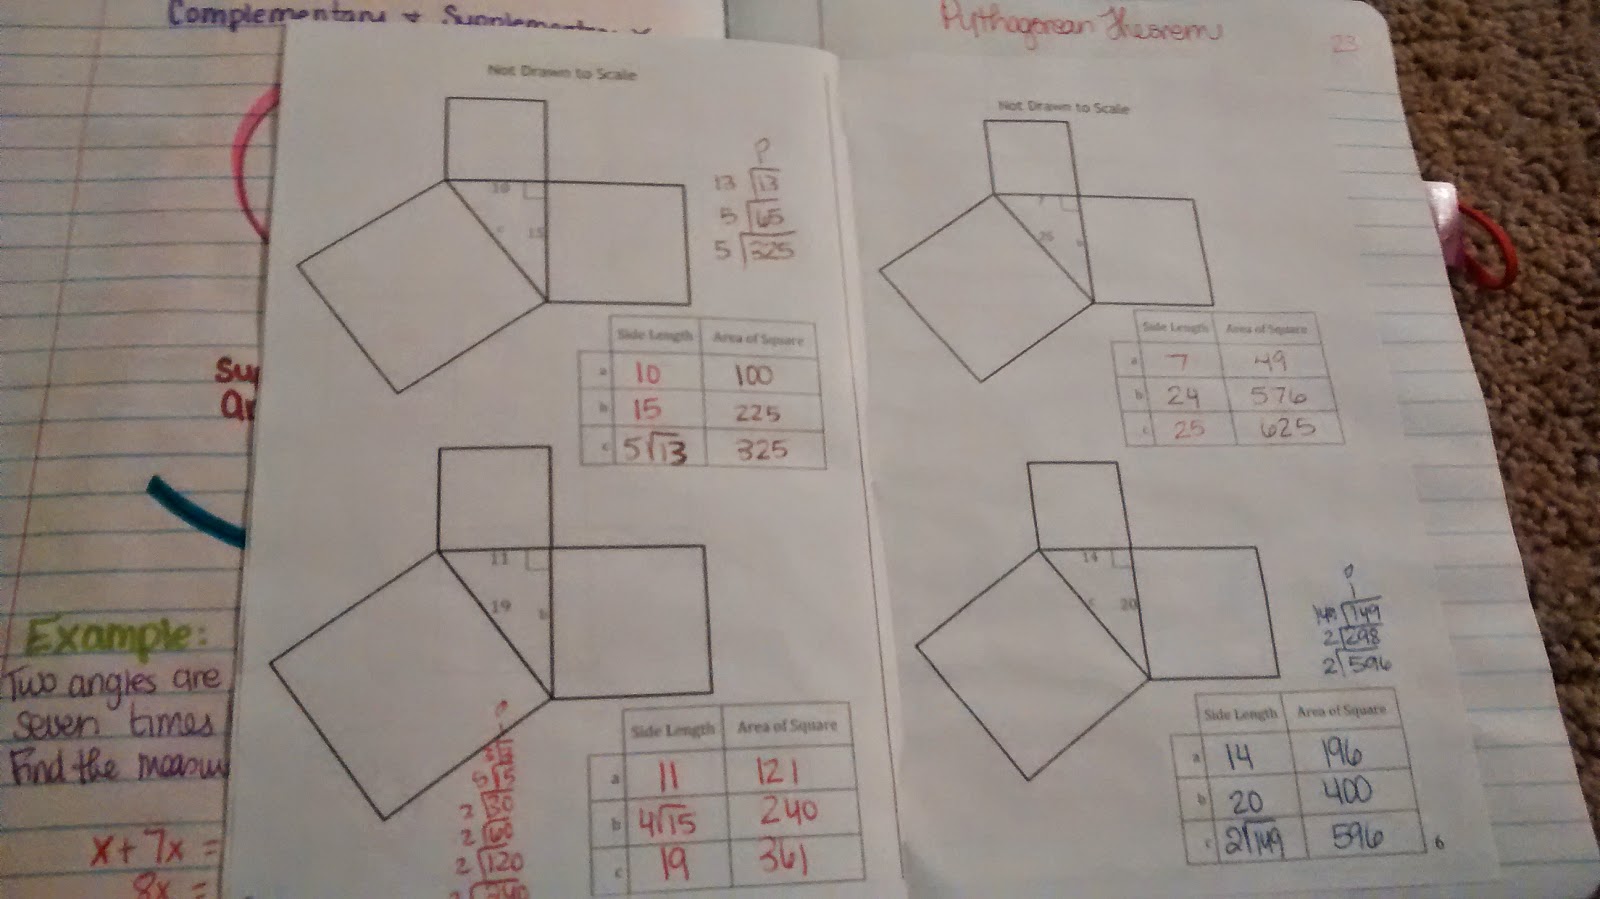 pythagorean theorem notes interactive note book inb